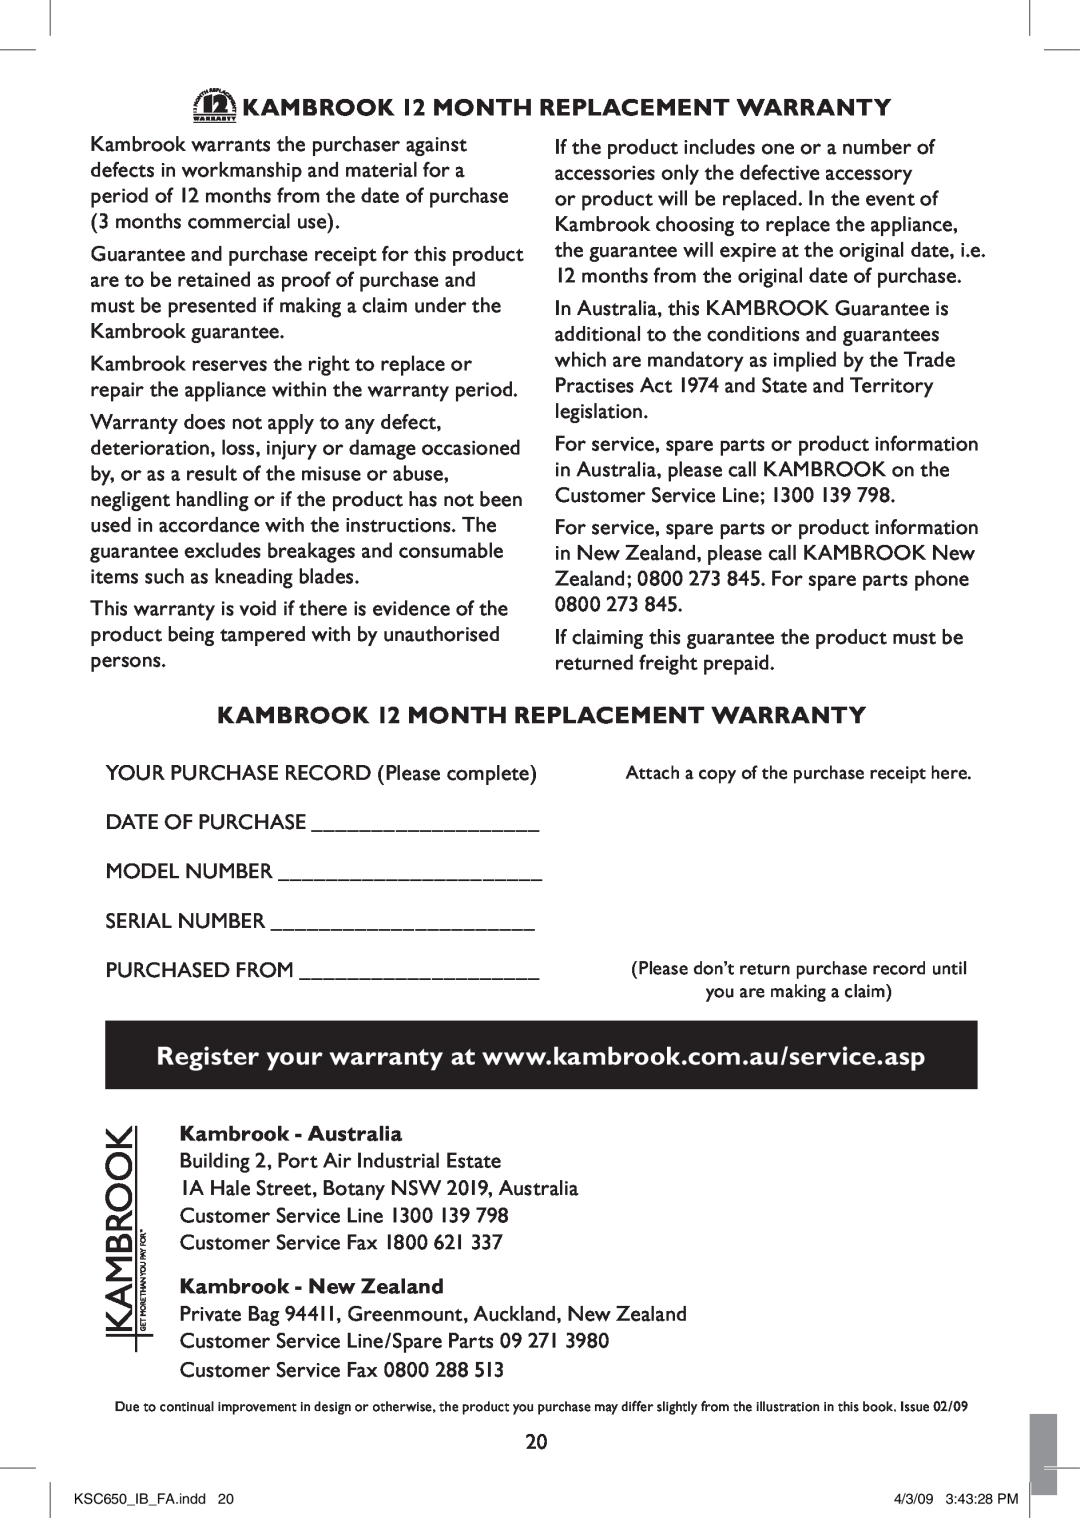 Kambrook KSC650 manual KAMBROOK 12 MONTH REPLACEMENT WARRANTY, Kambrook - Australia, Kambrook - New Zealand 